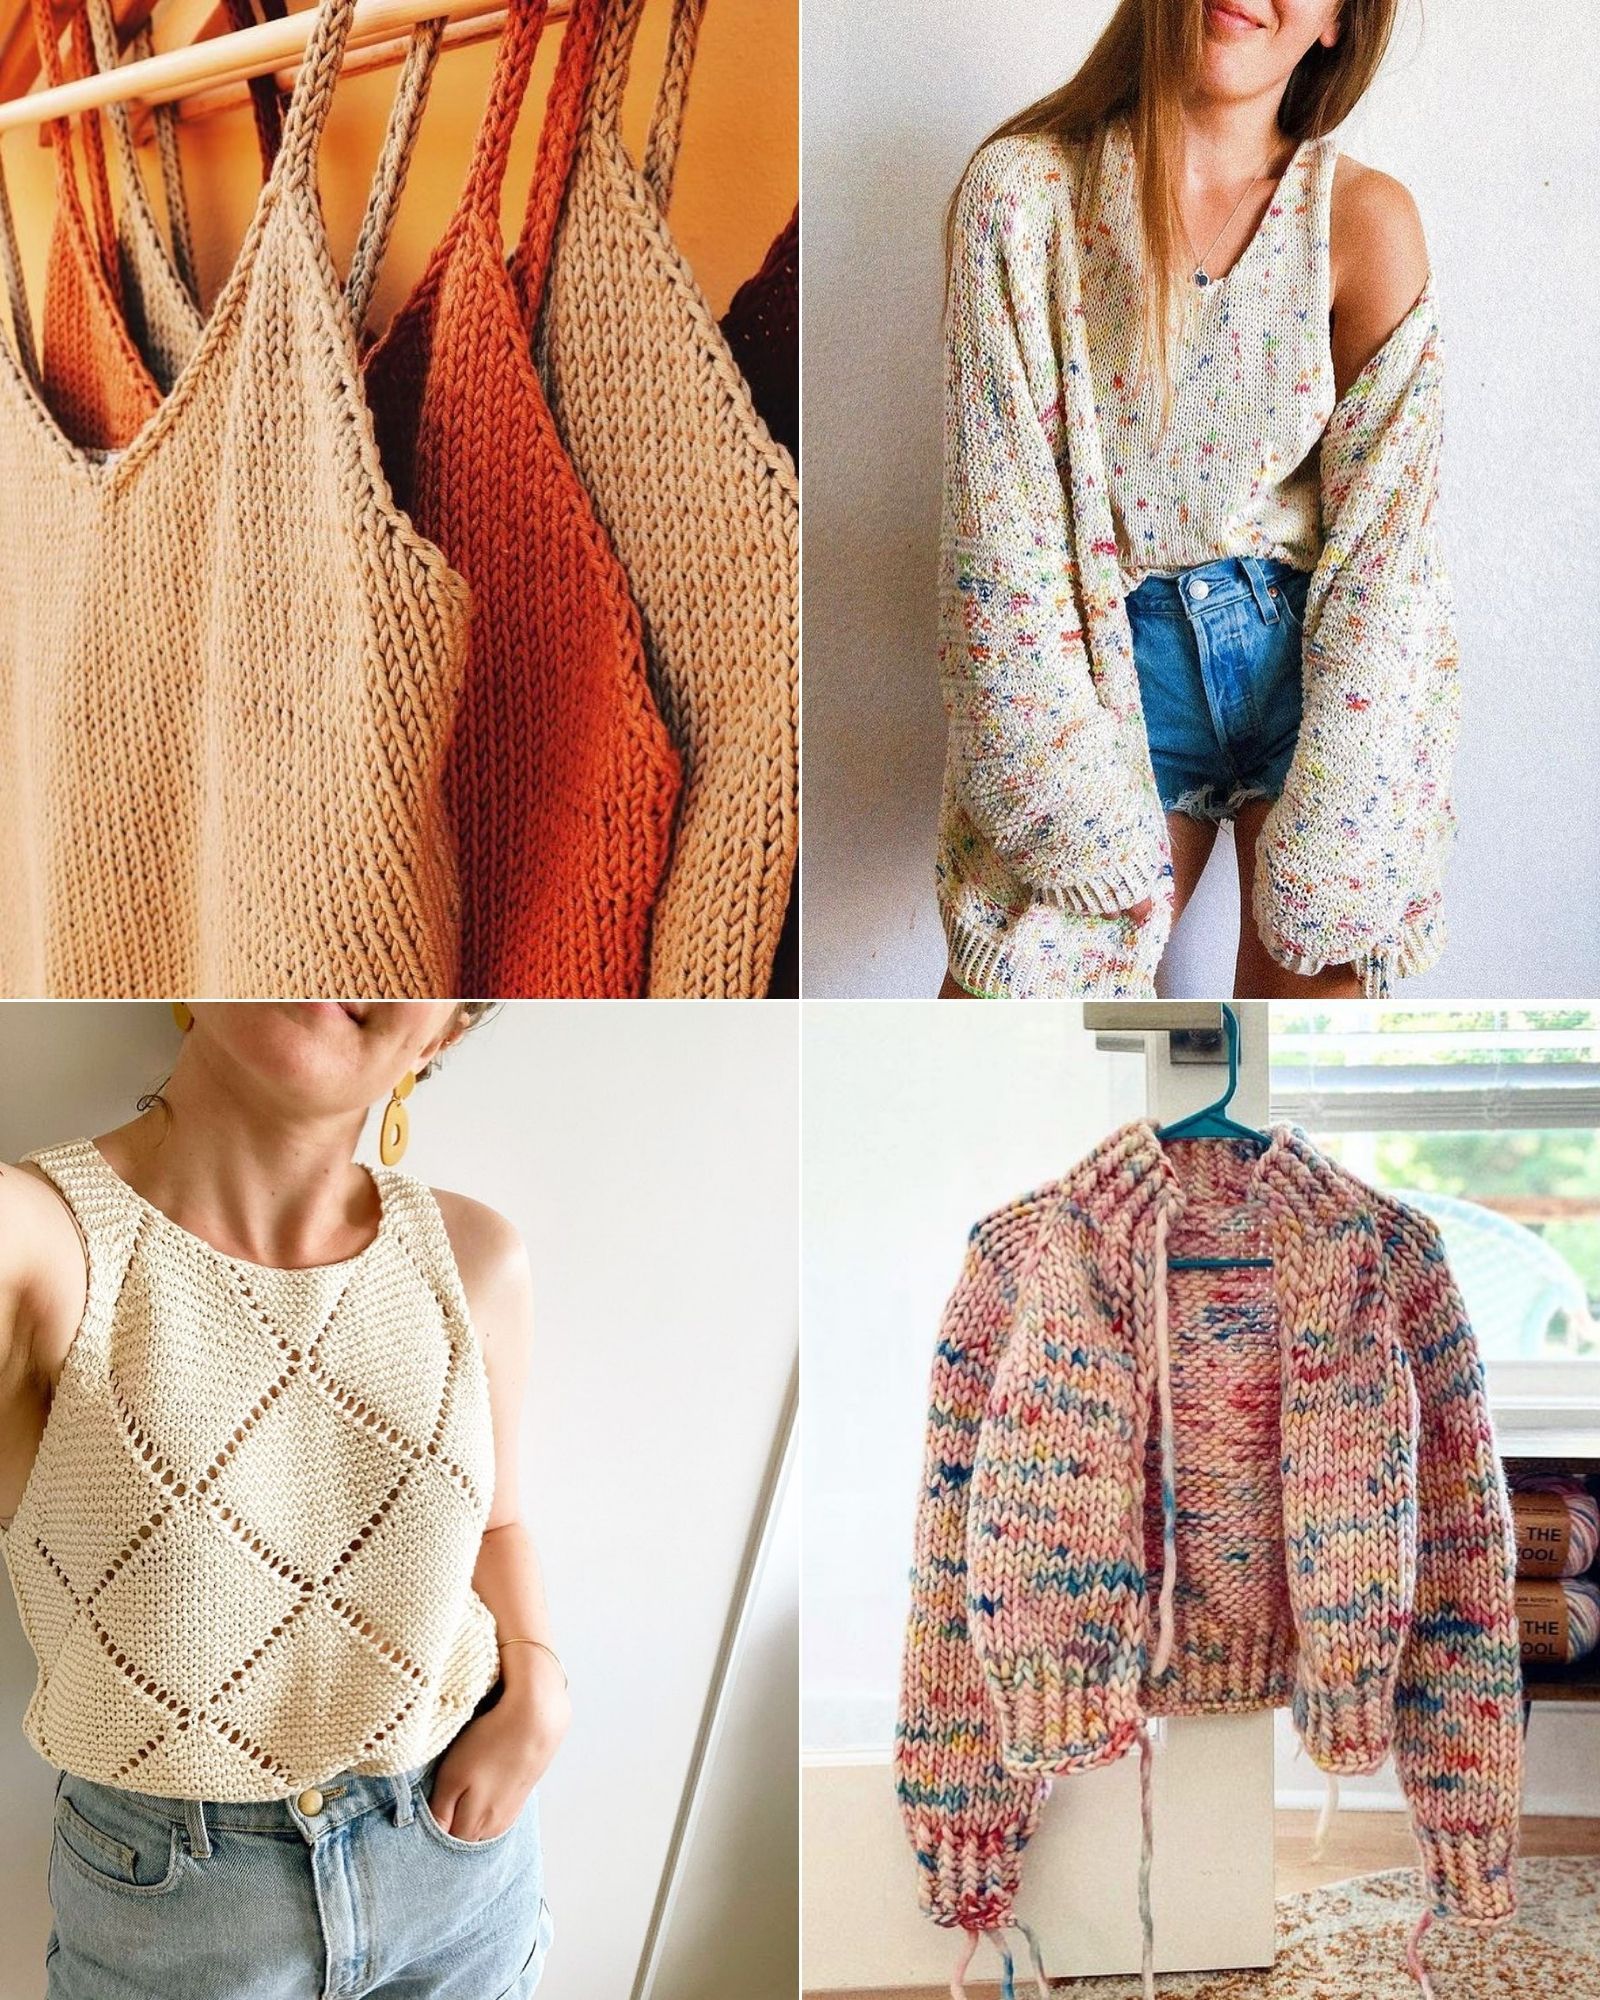 Tài khoản Instagram @weareknitters truyền cảm hứng đan len